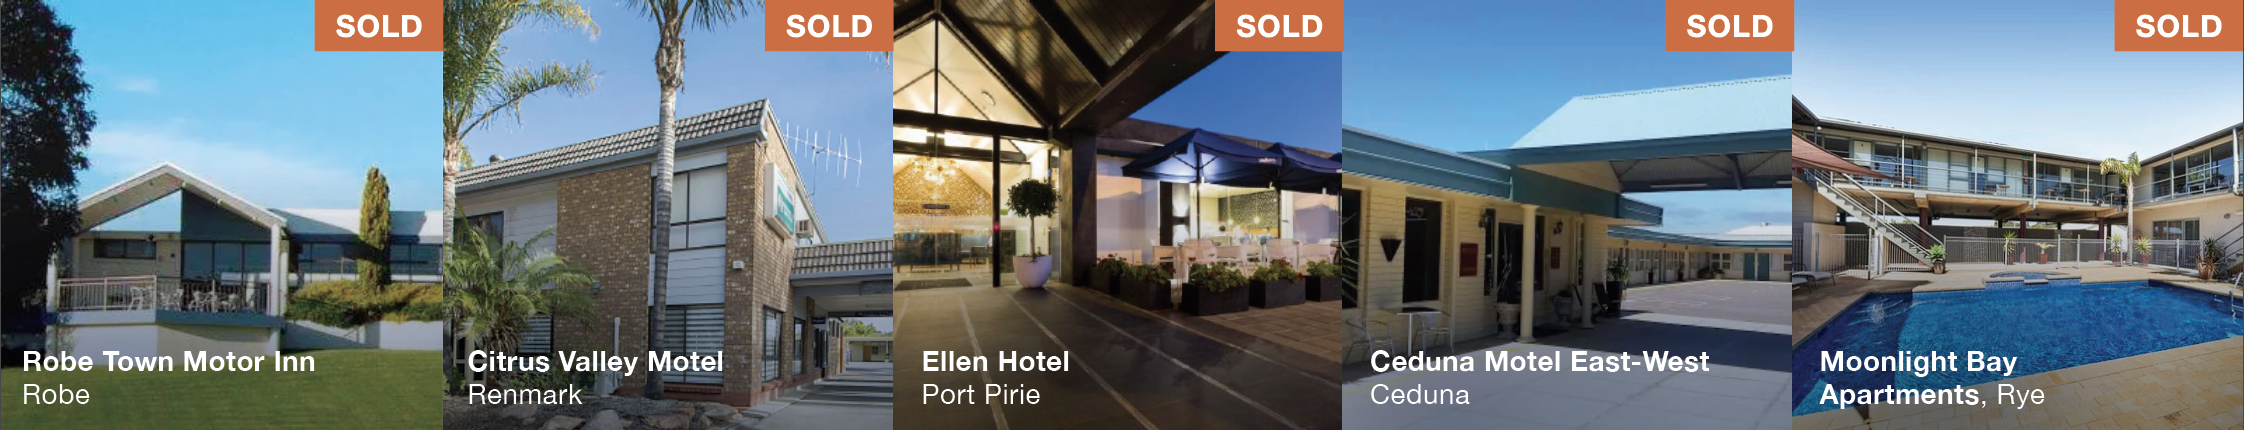 South Australia Sold Properties